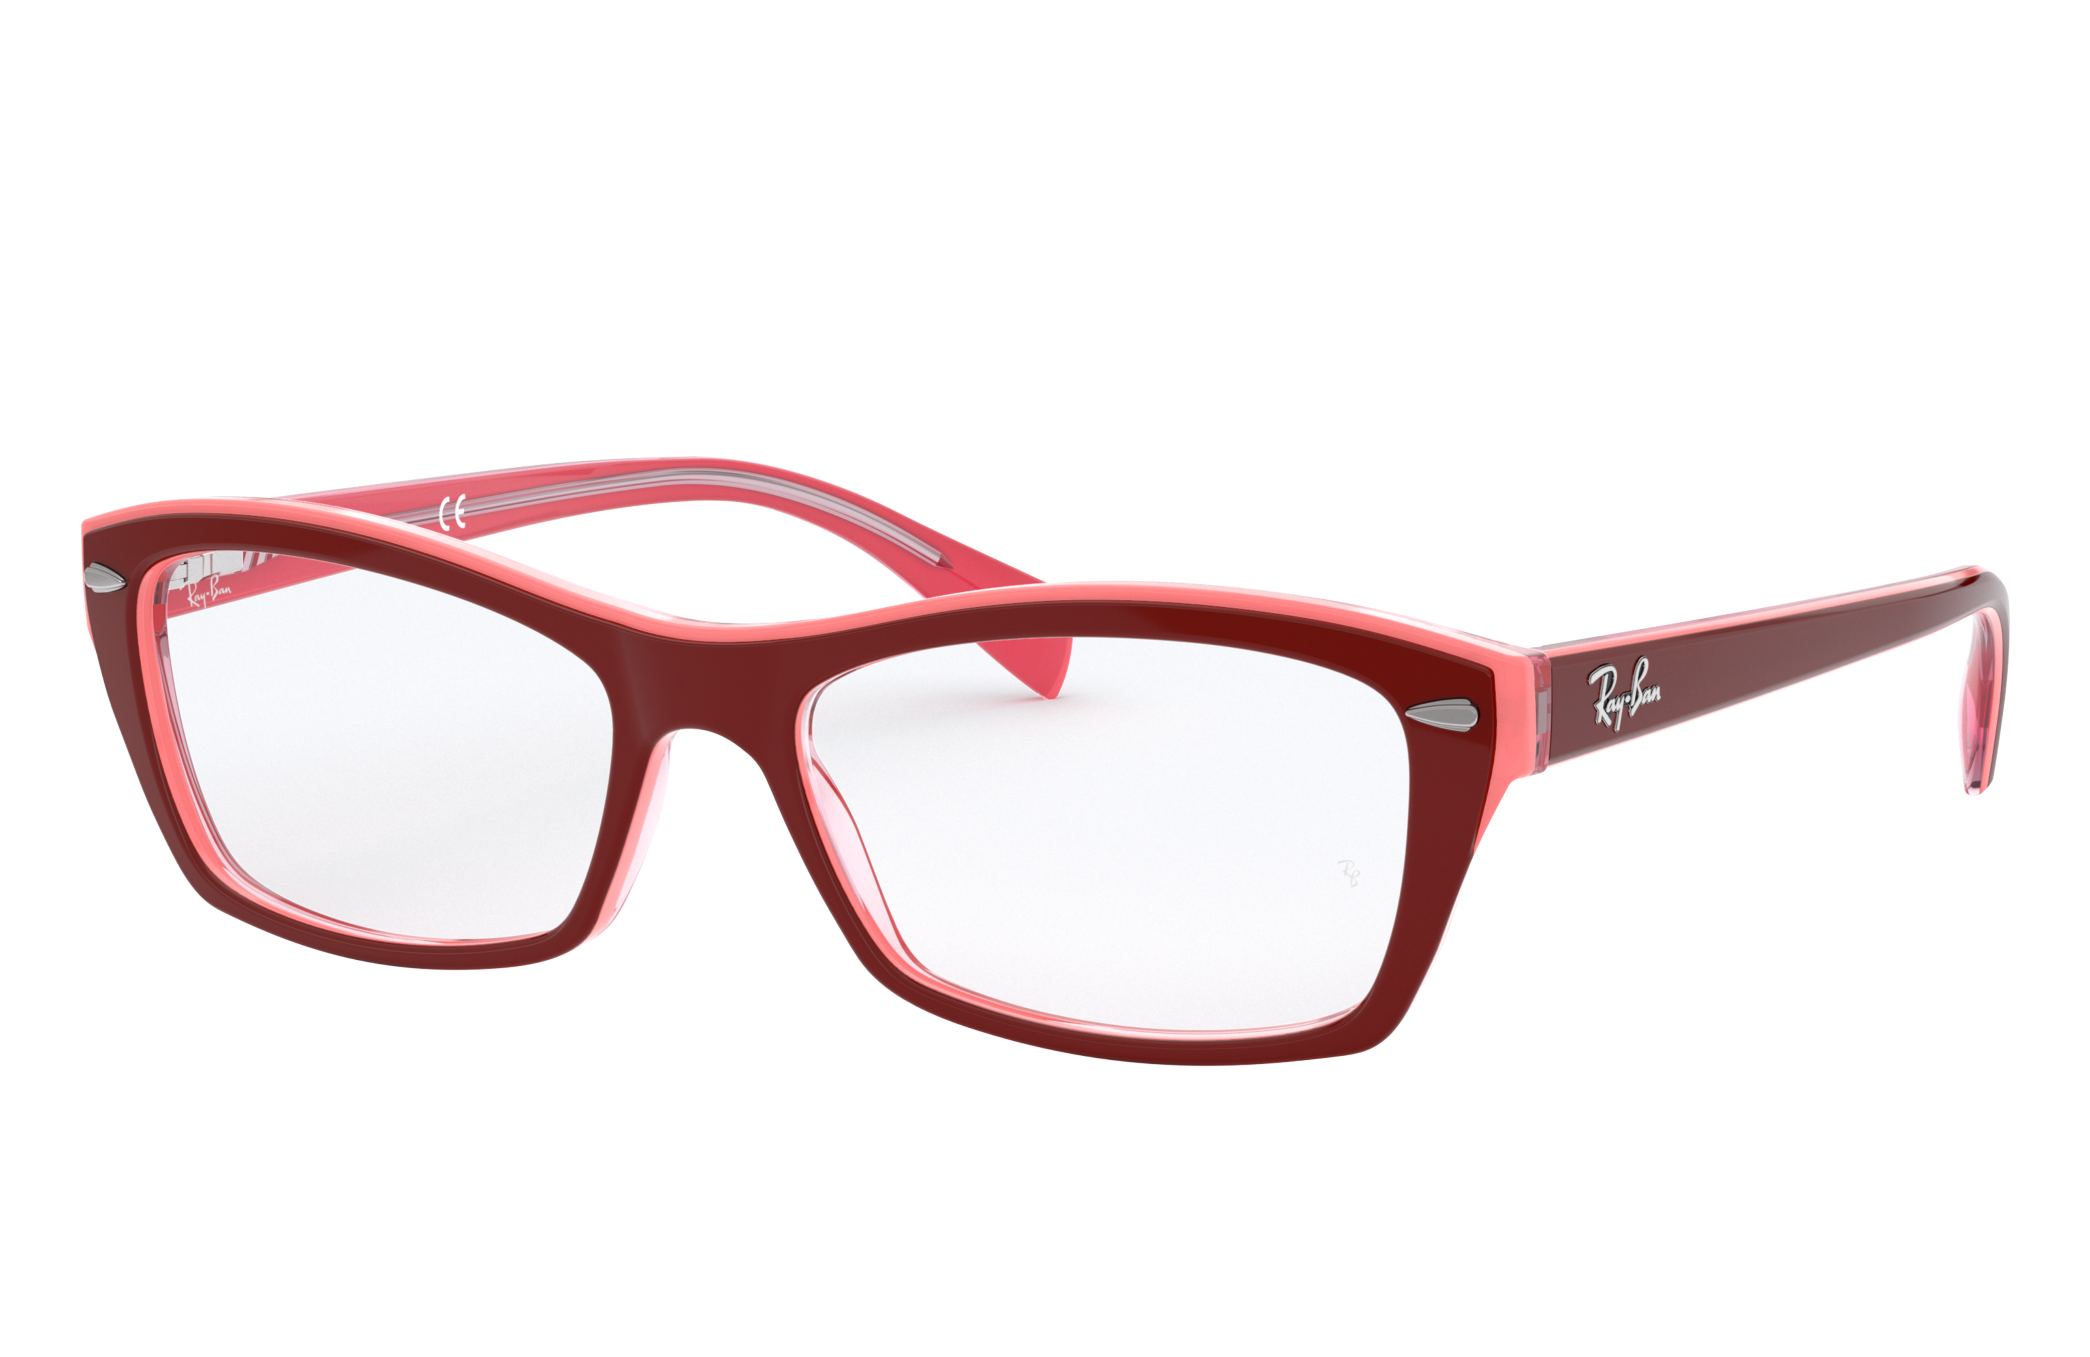 Rb5255 Eyeglasses with Purple-Reddish Frame - RB5255 | Ray-Ban®